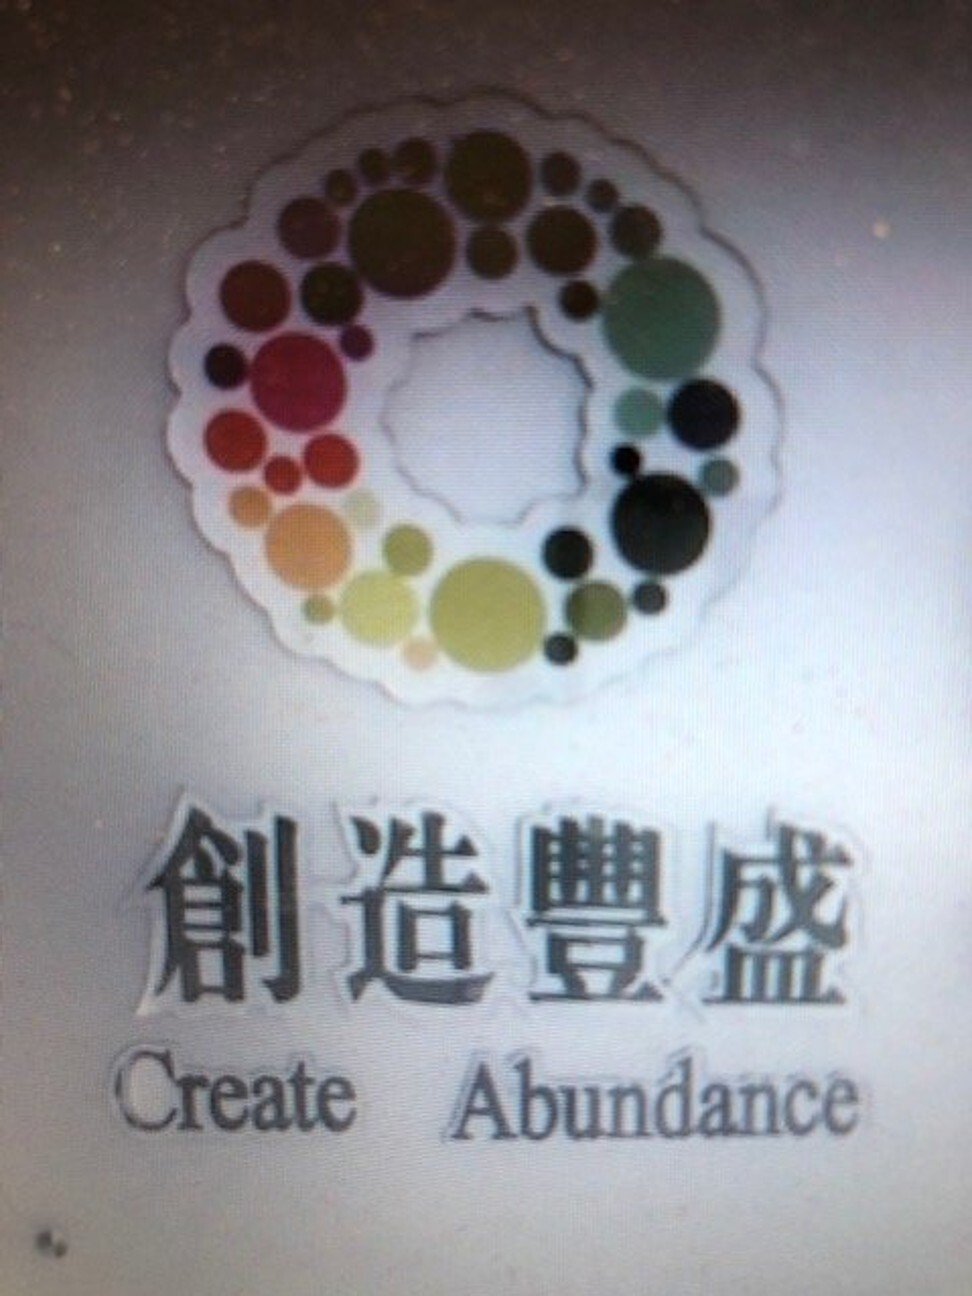 The logo of the Create Abundance group. Photo: IHIT